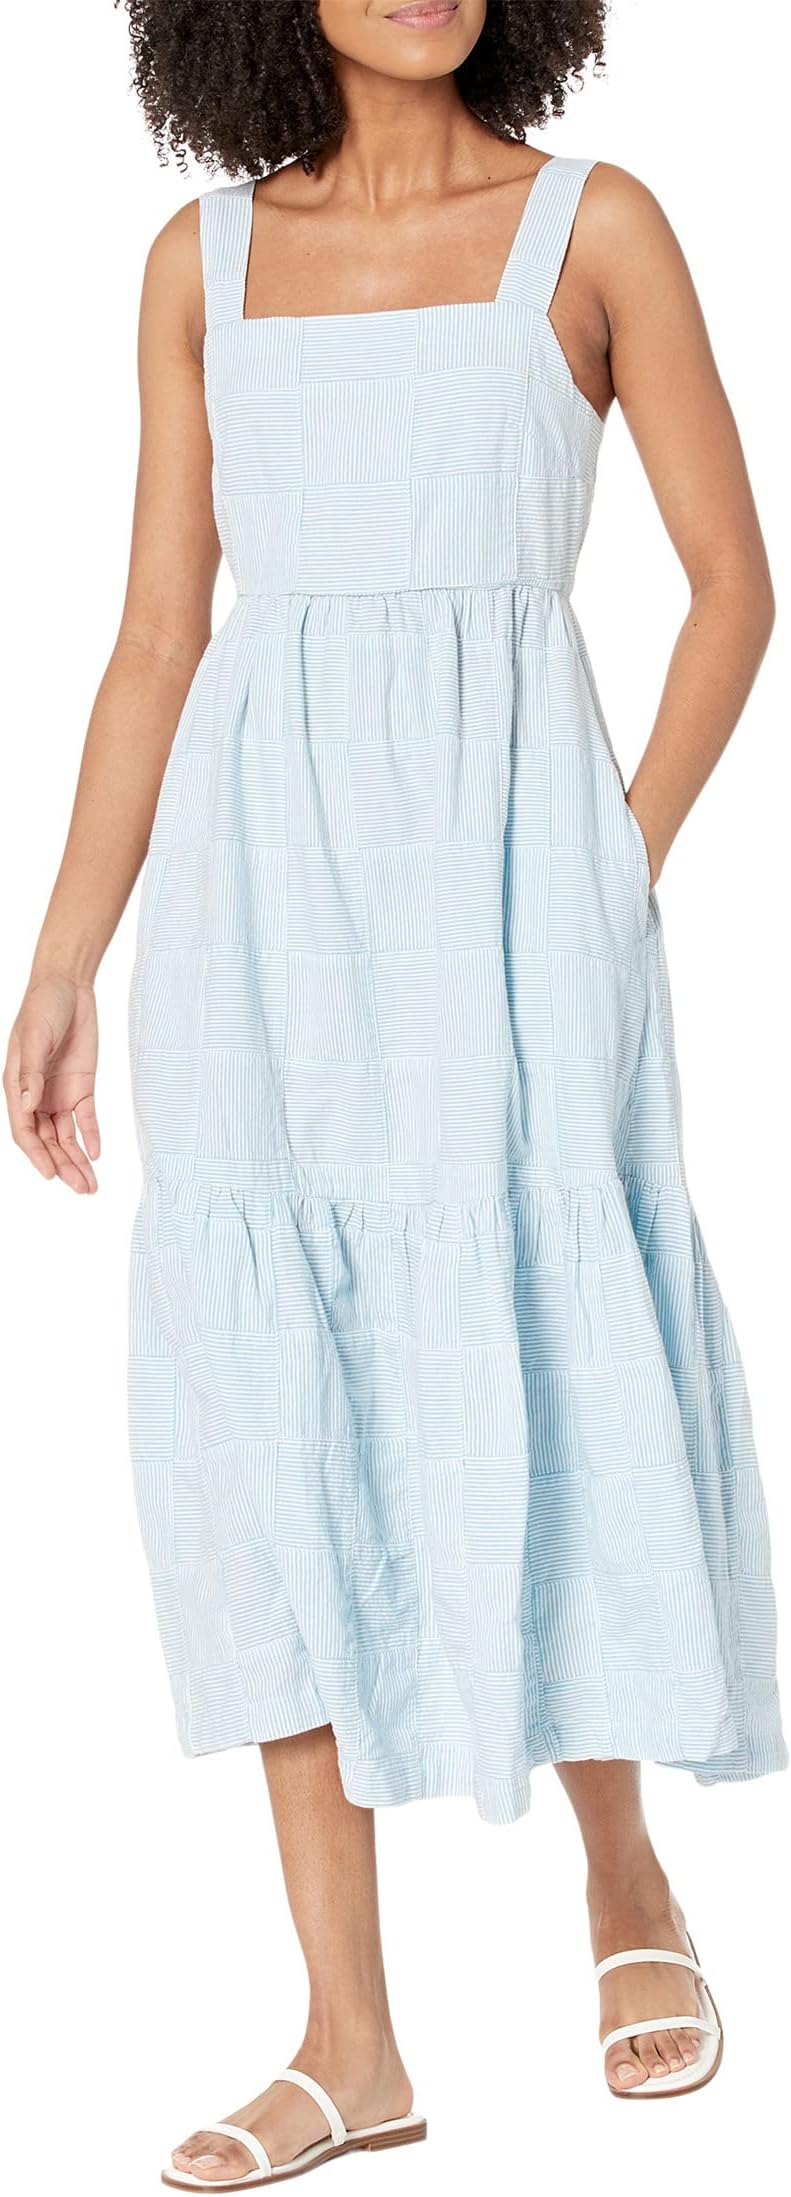 Многоярусное платье миди с фартуком Layne - Пэчворк Madewell, цвет Earthsea Seersucker Patchwork timberland seersucker gingham